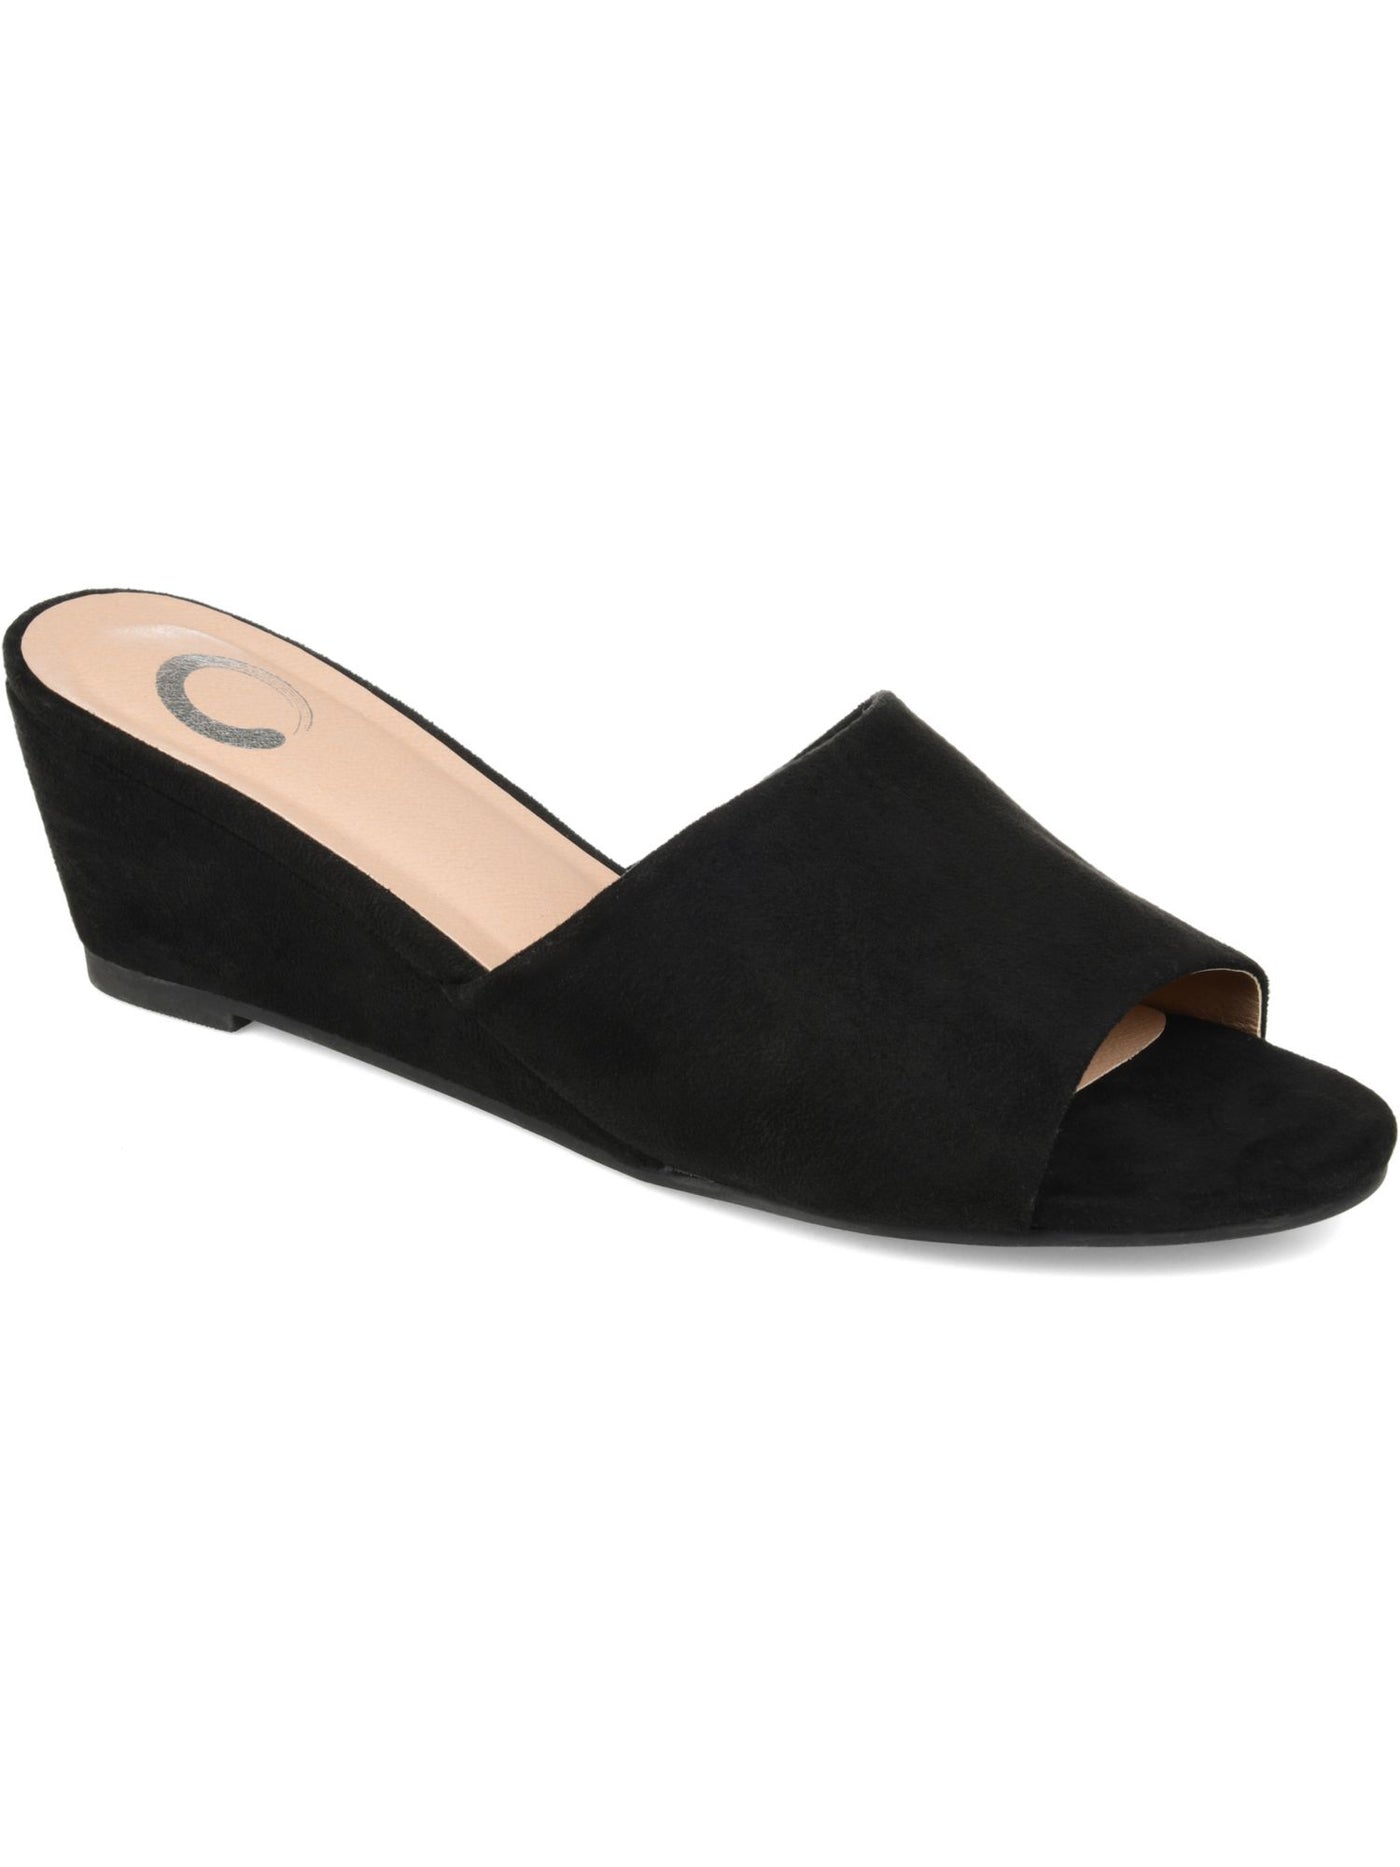 JOURNEE COLLECTION Womens Black Padded Pavan Open Toe Wedge Slip On Slide Sandals Shoes 9 M